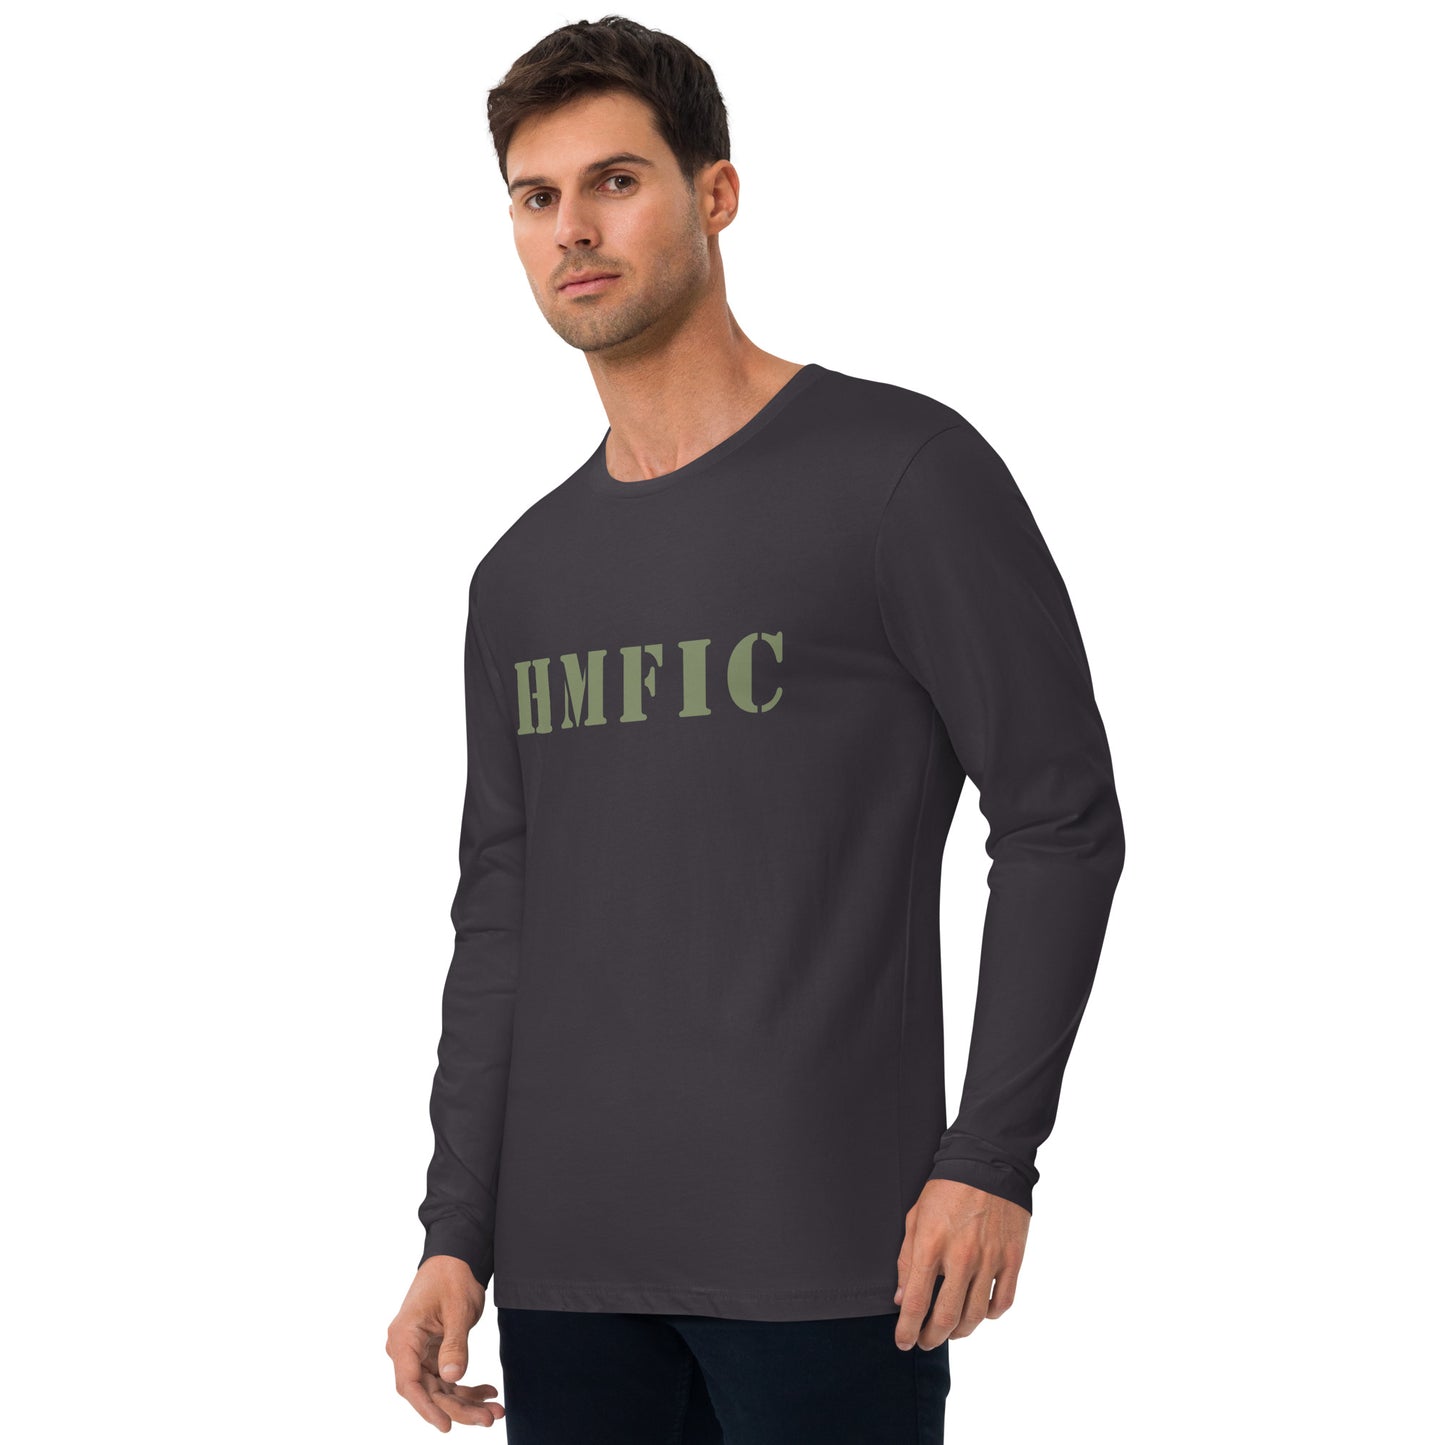 Men's Long Sleeve Crew Shirt - HMFIC - FAFO Sportswear